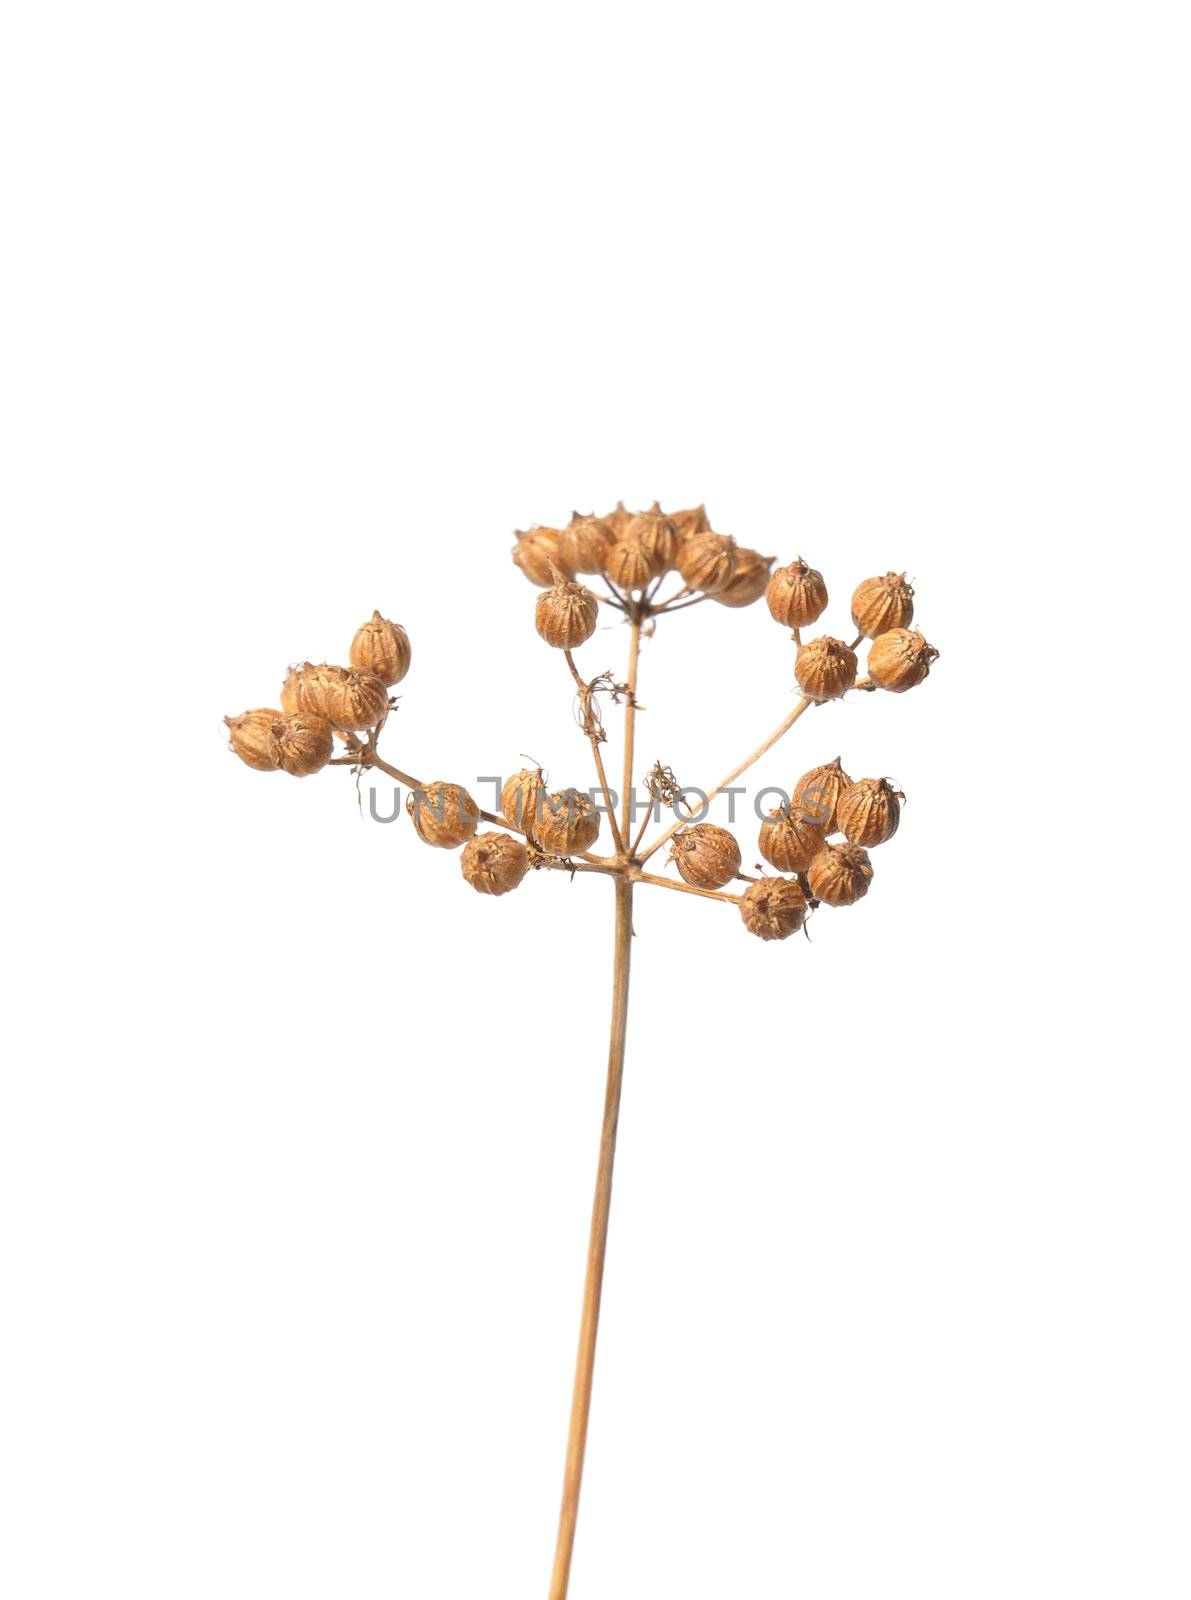 Coriander seeds (Coriandrum sativum)